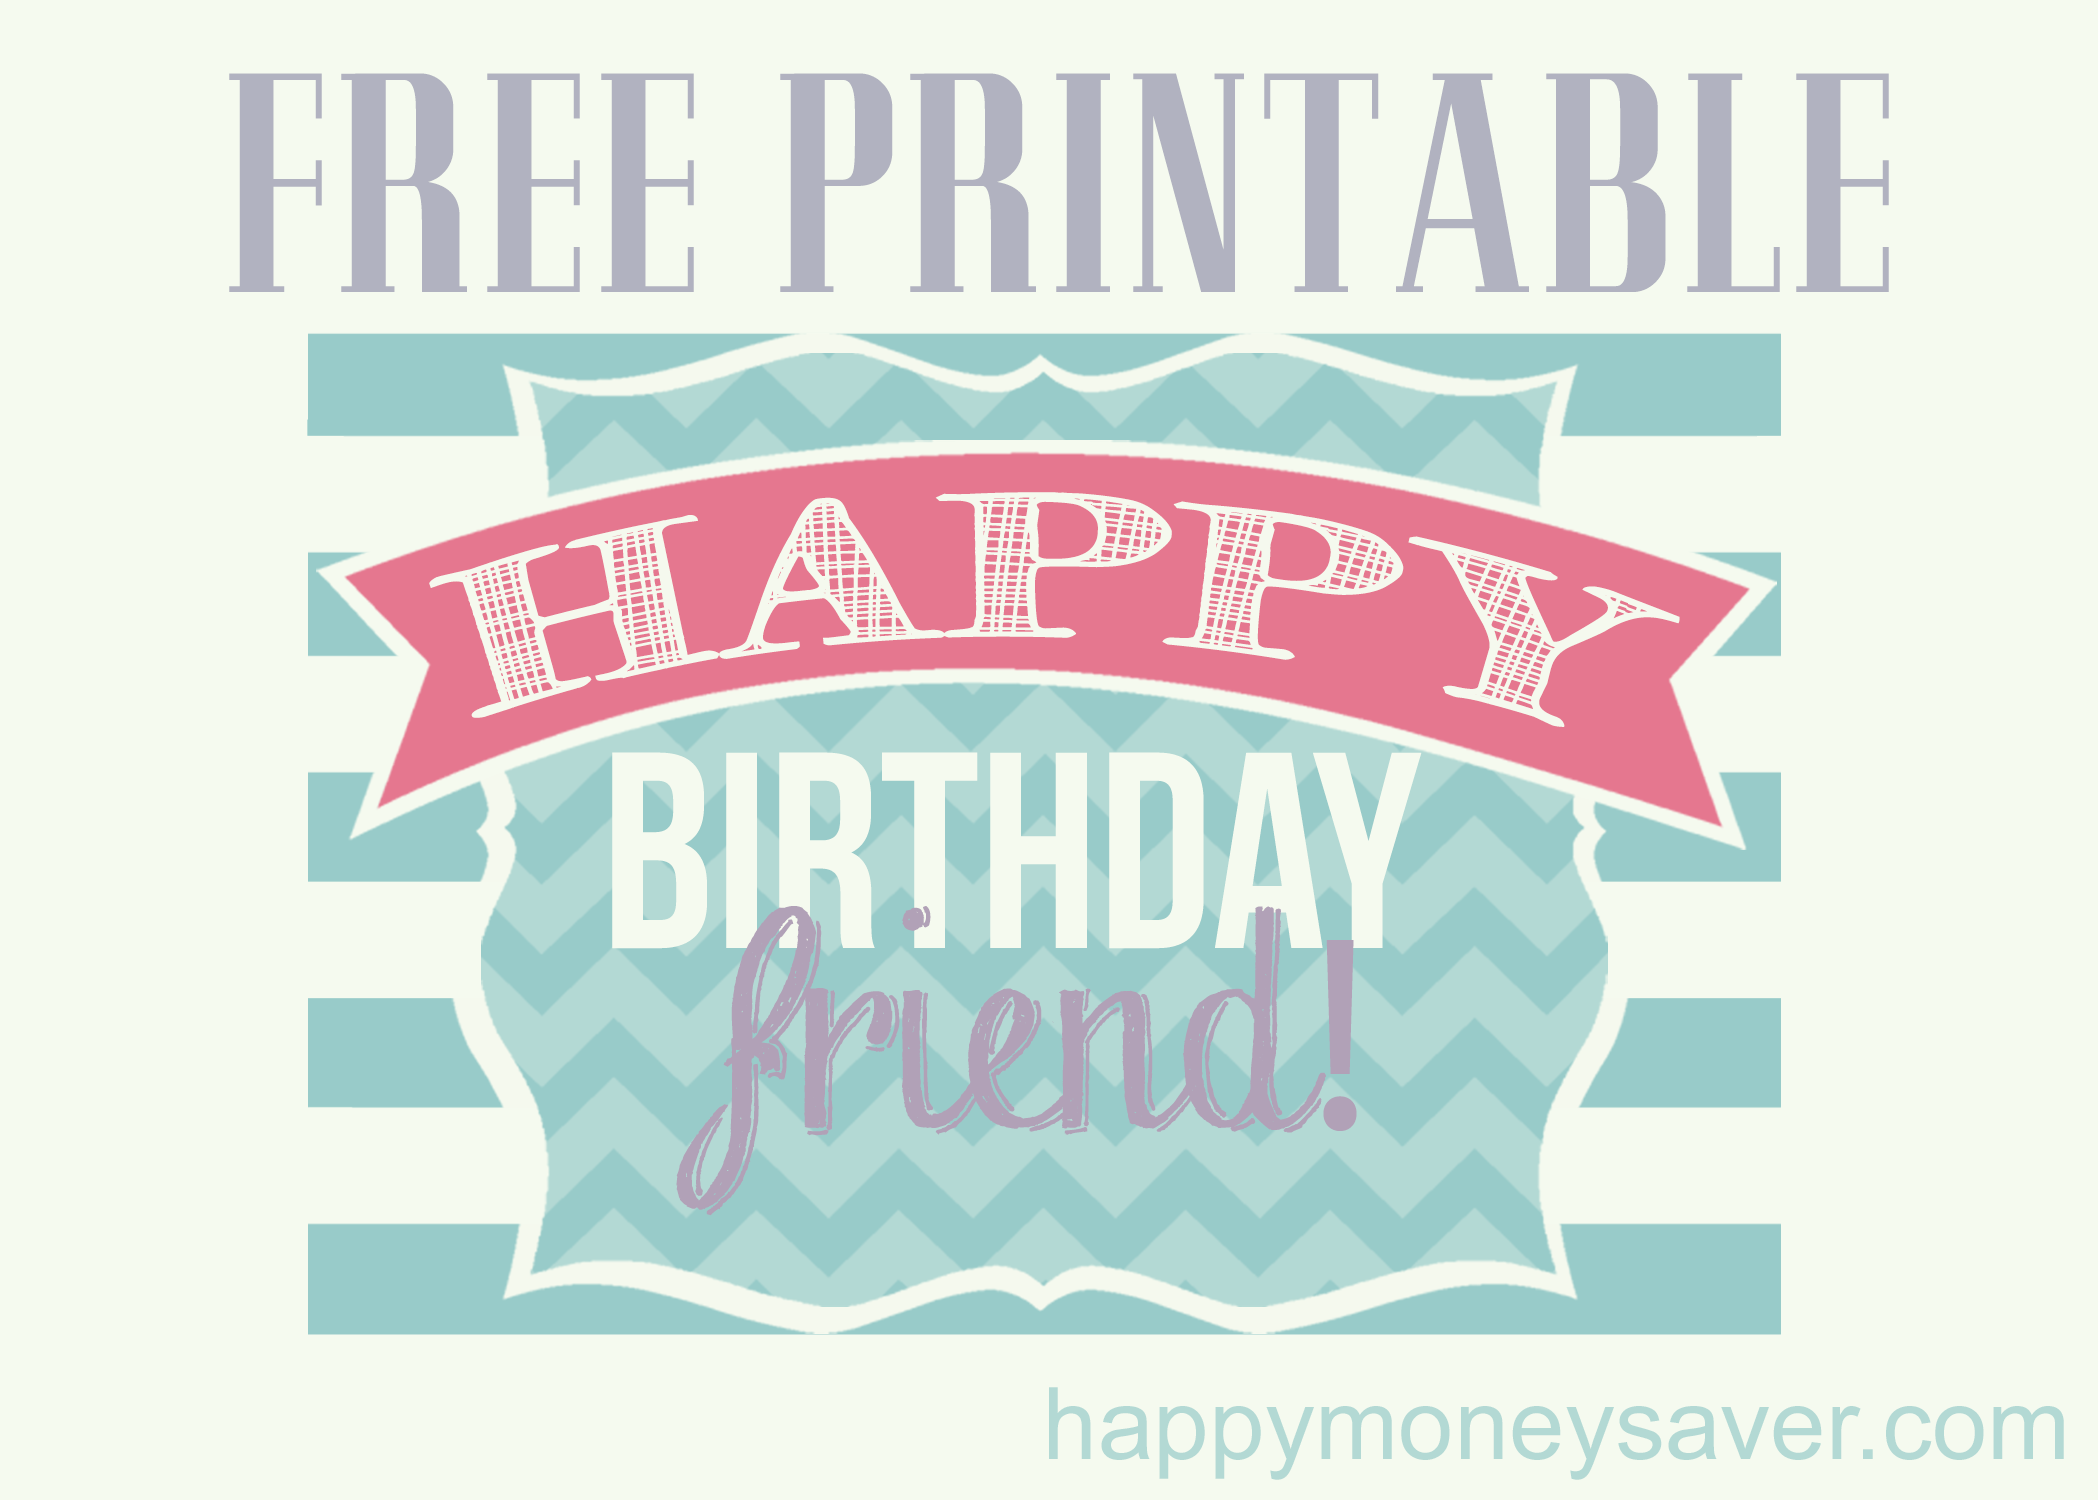 Friend Birthday Cards Printable - Printable Templates Free